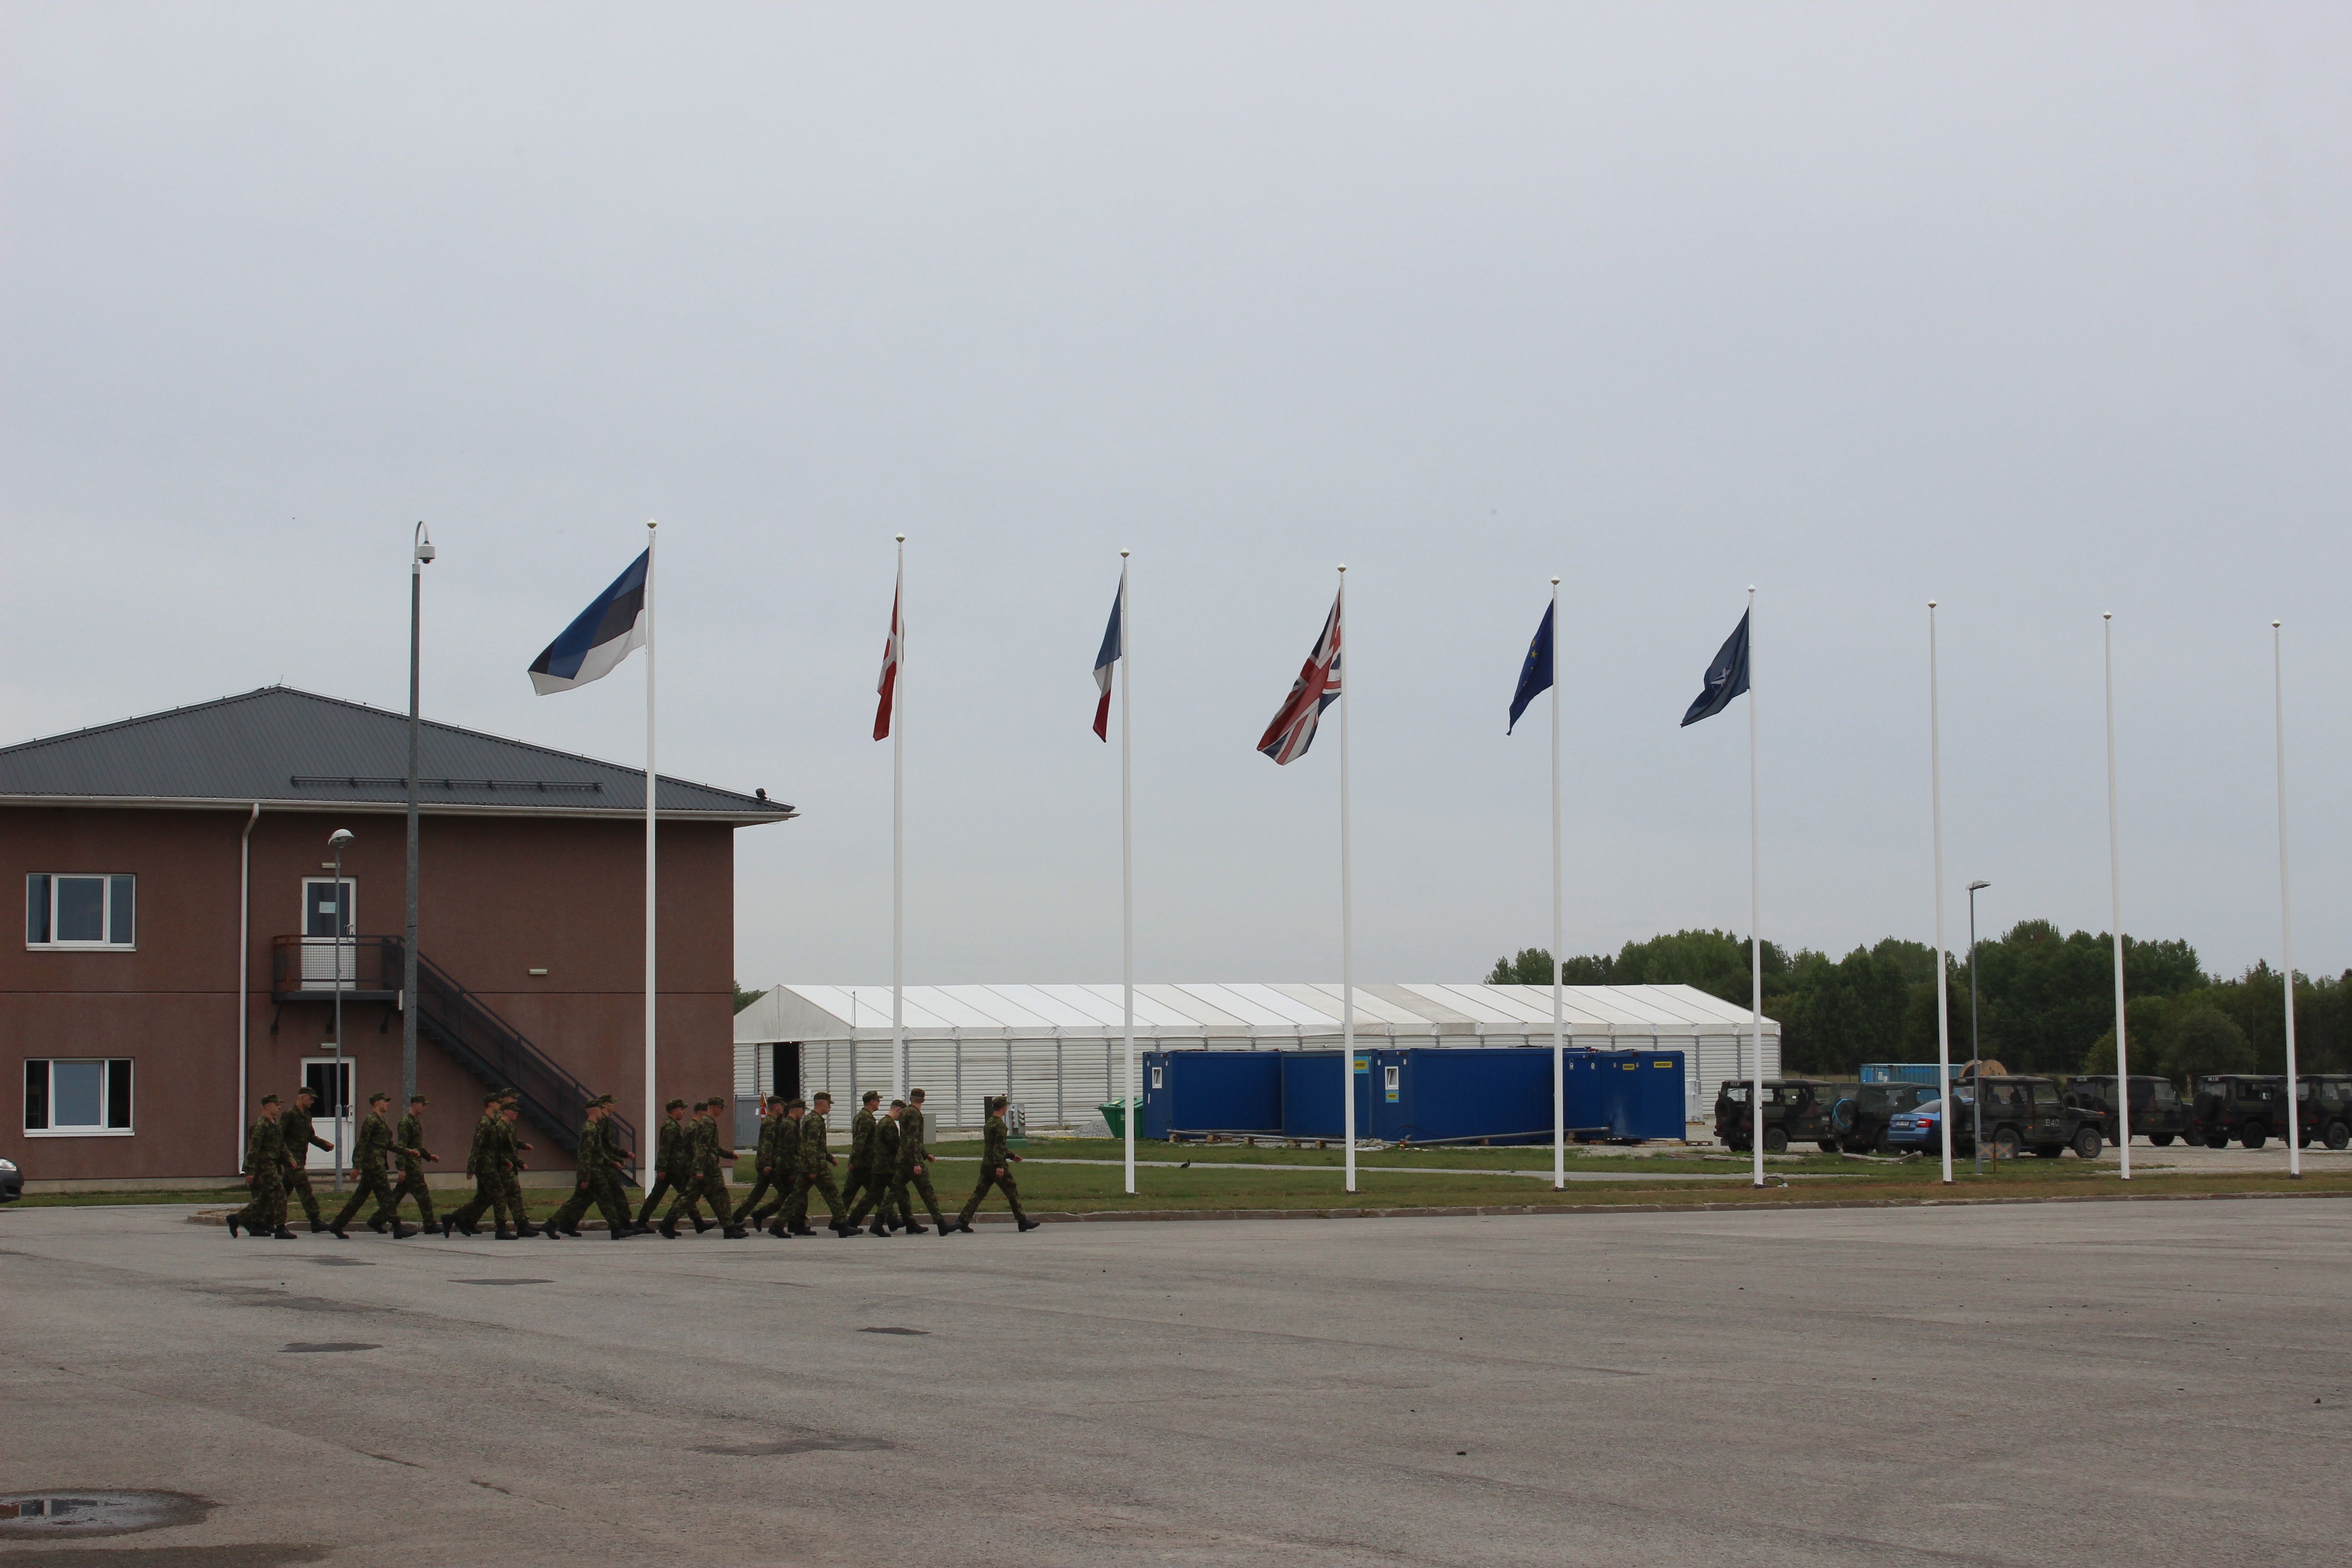 Tapa army base where NATO's Enhanced Forward Presence Troops are based in Estonia. Image by Hani Zaitoun. Estonia, 2019.